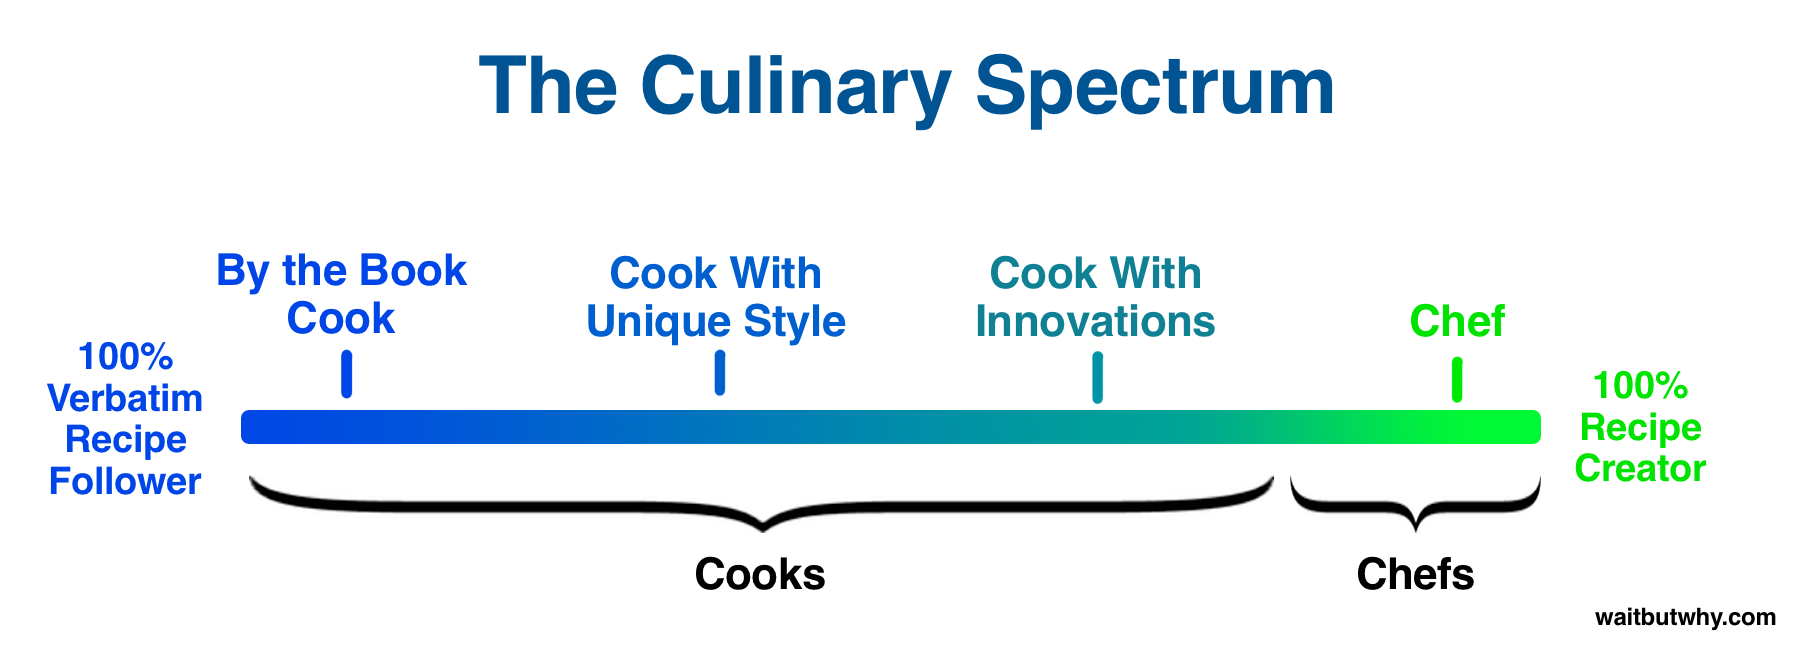 Chef-Cook Spectrum